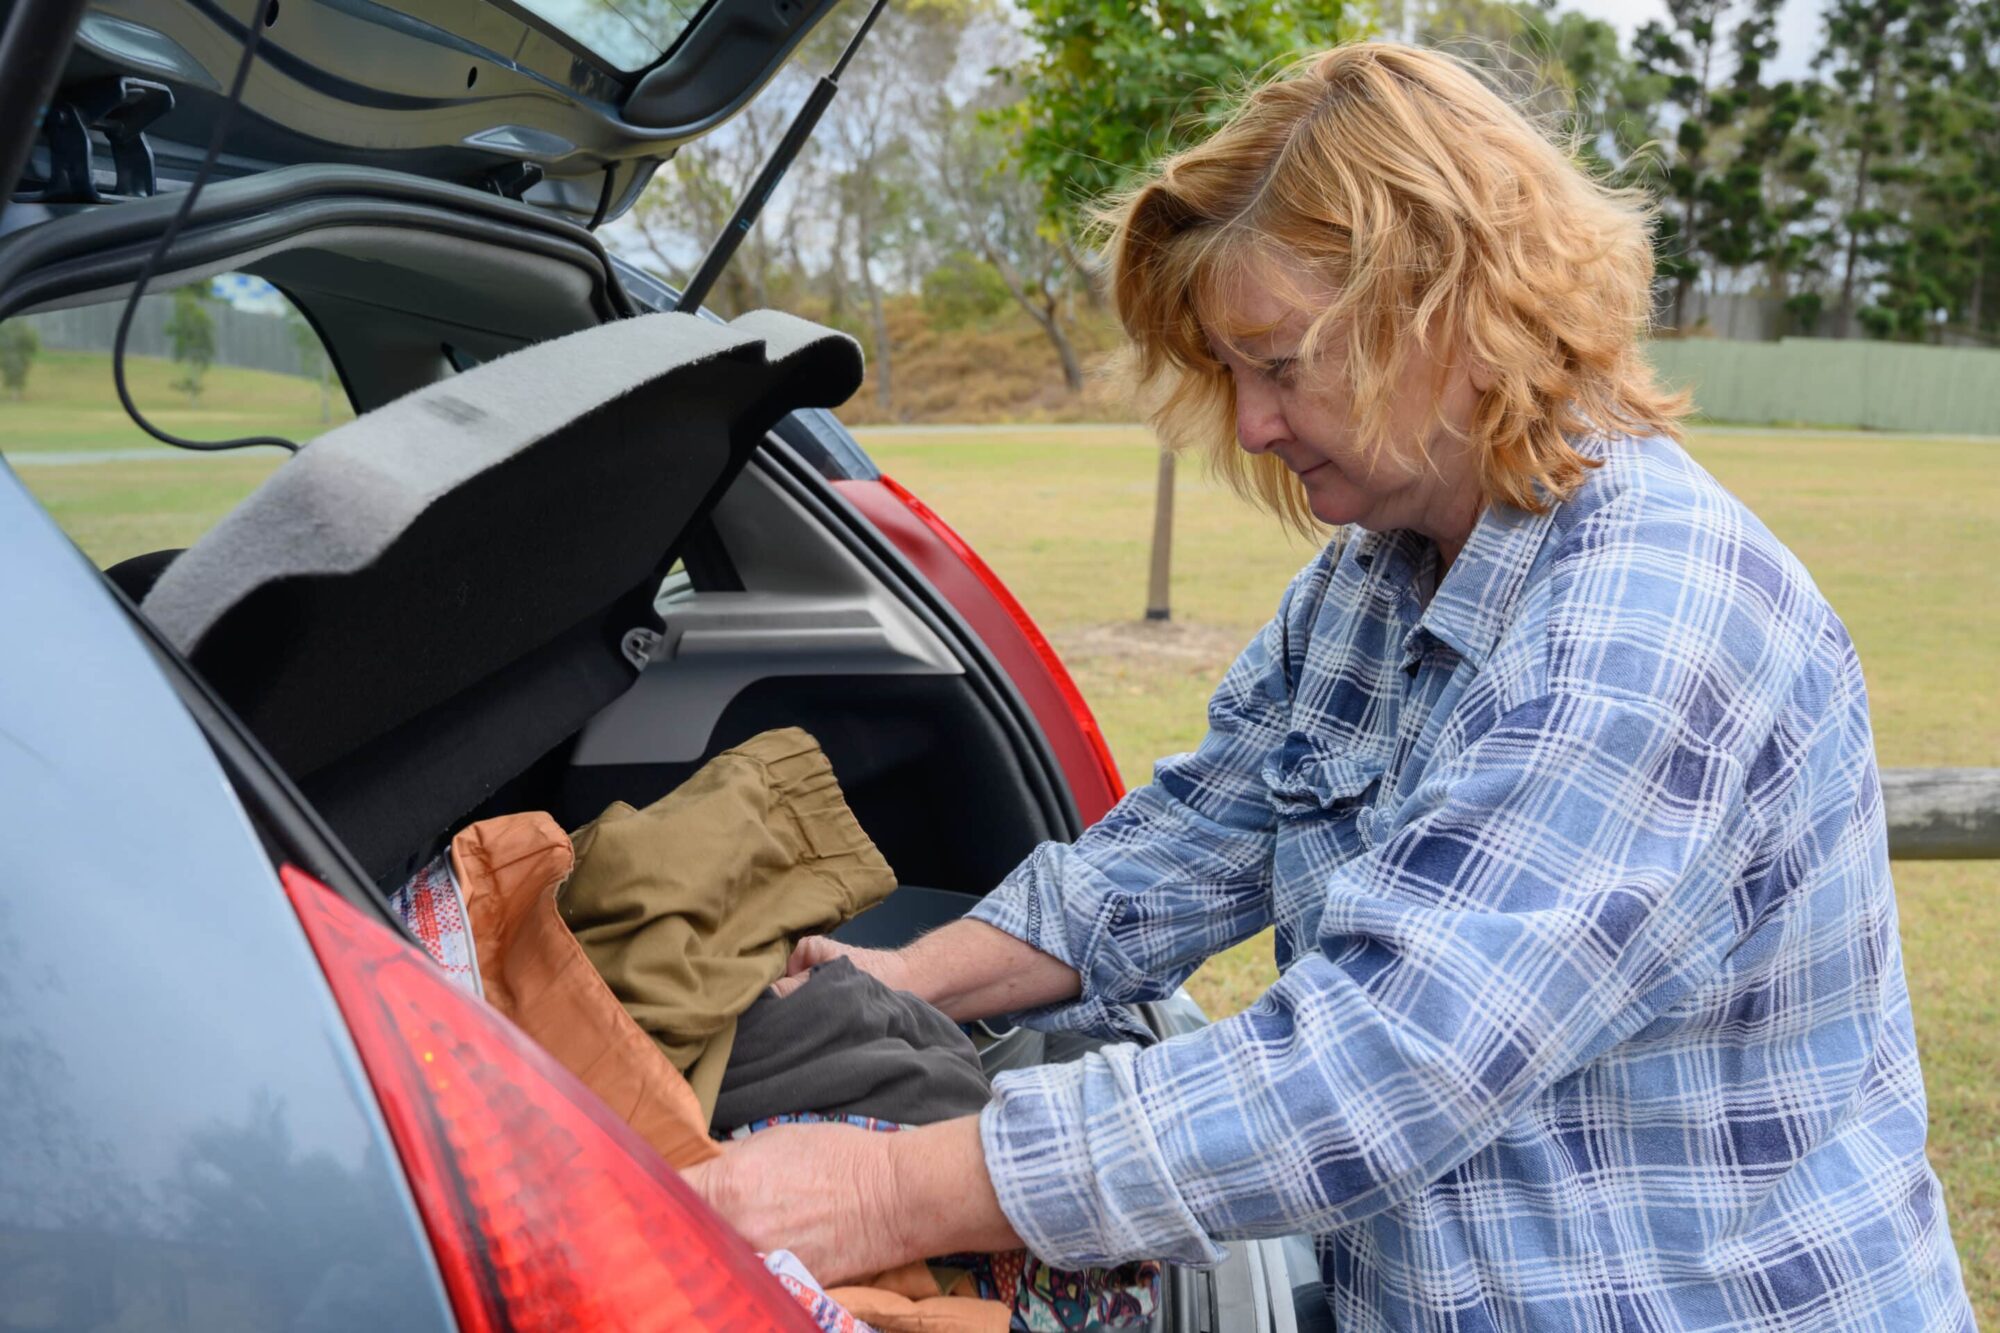 Homeless woman opens car boot